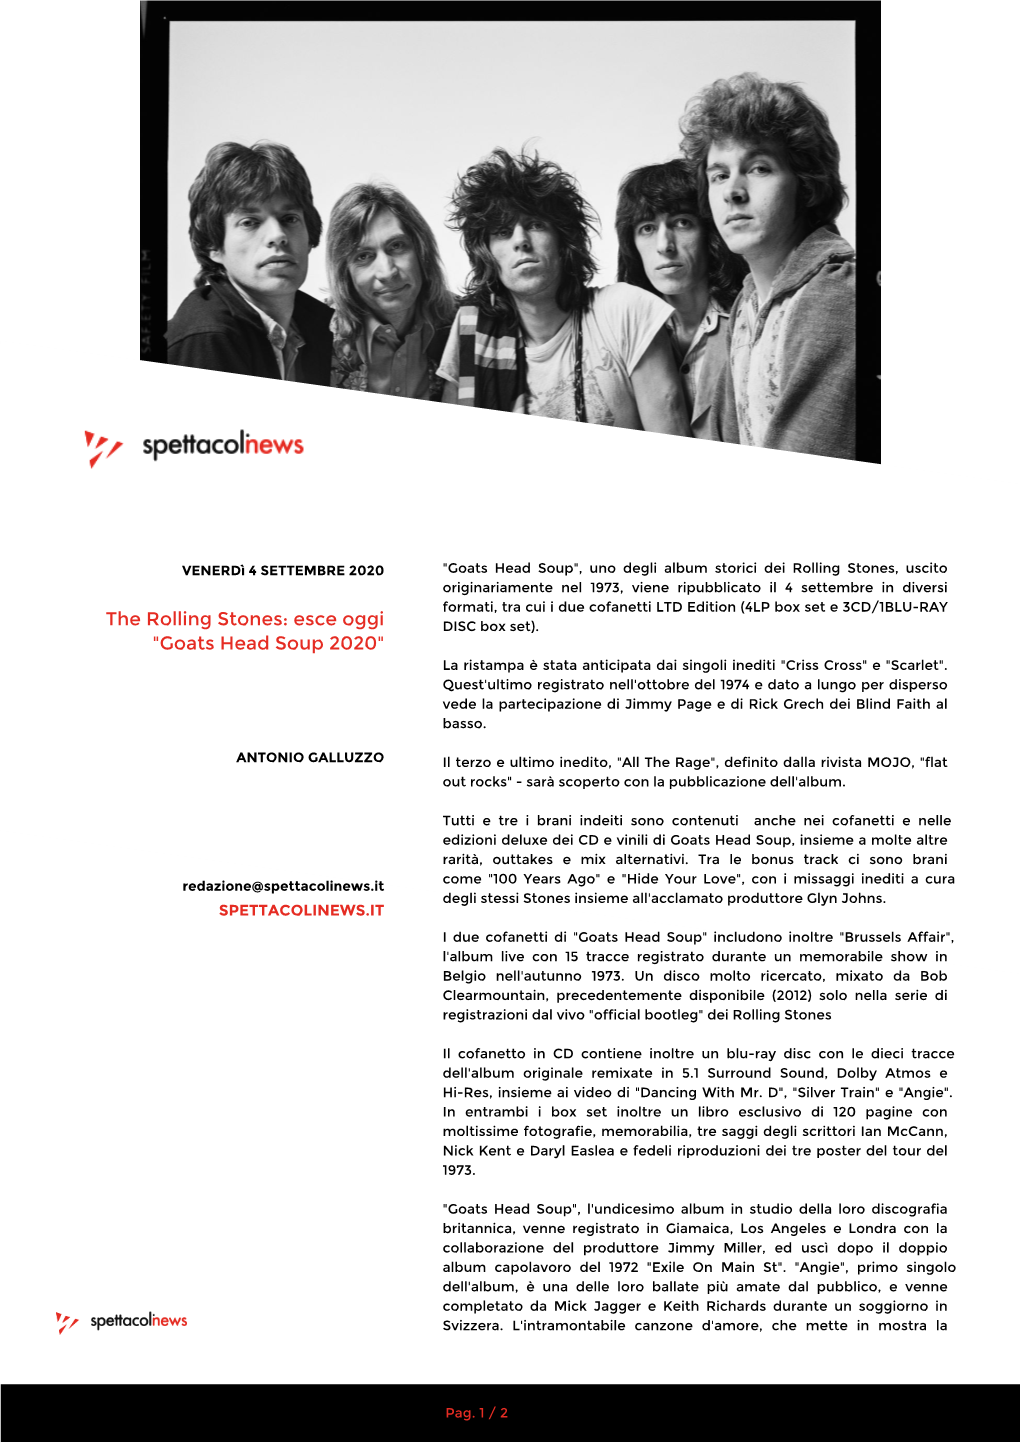 The Rolling Stones: Esce Oggi "Goats Head Soup 2020"